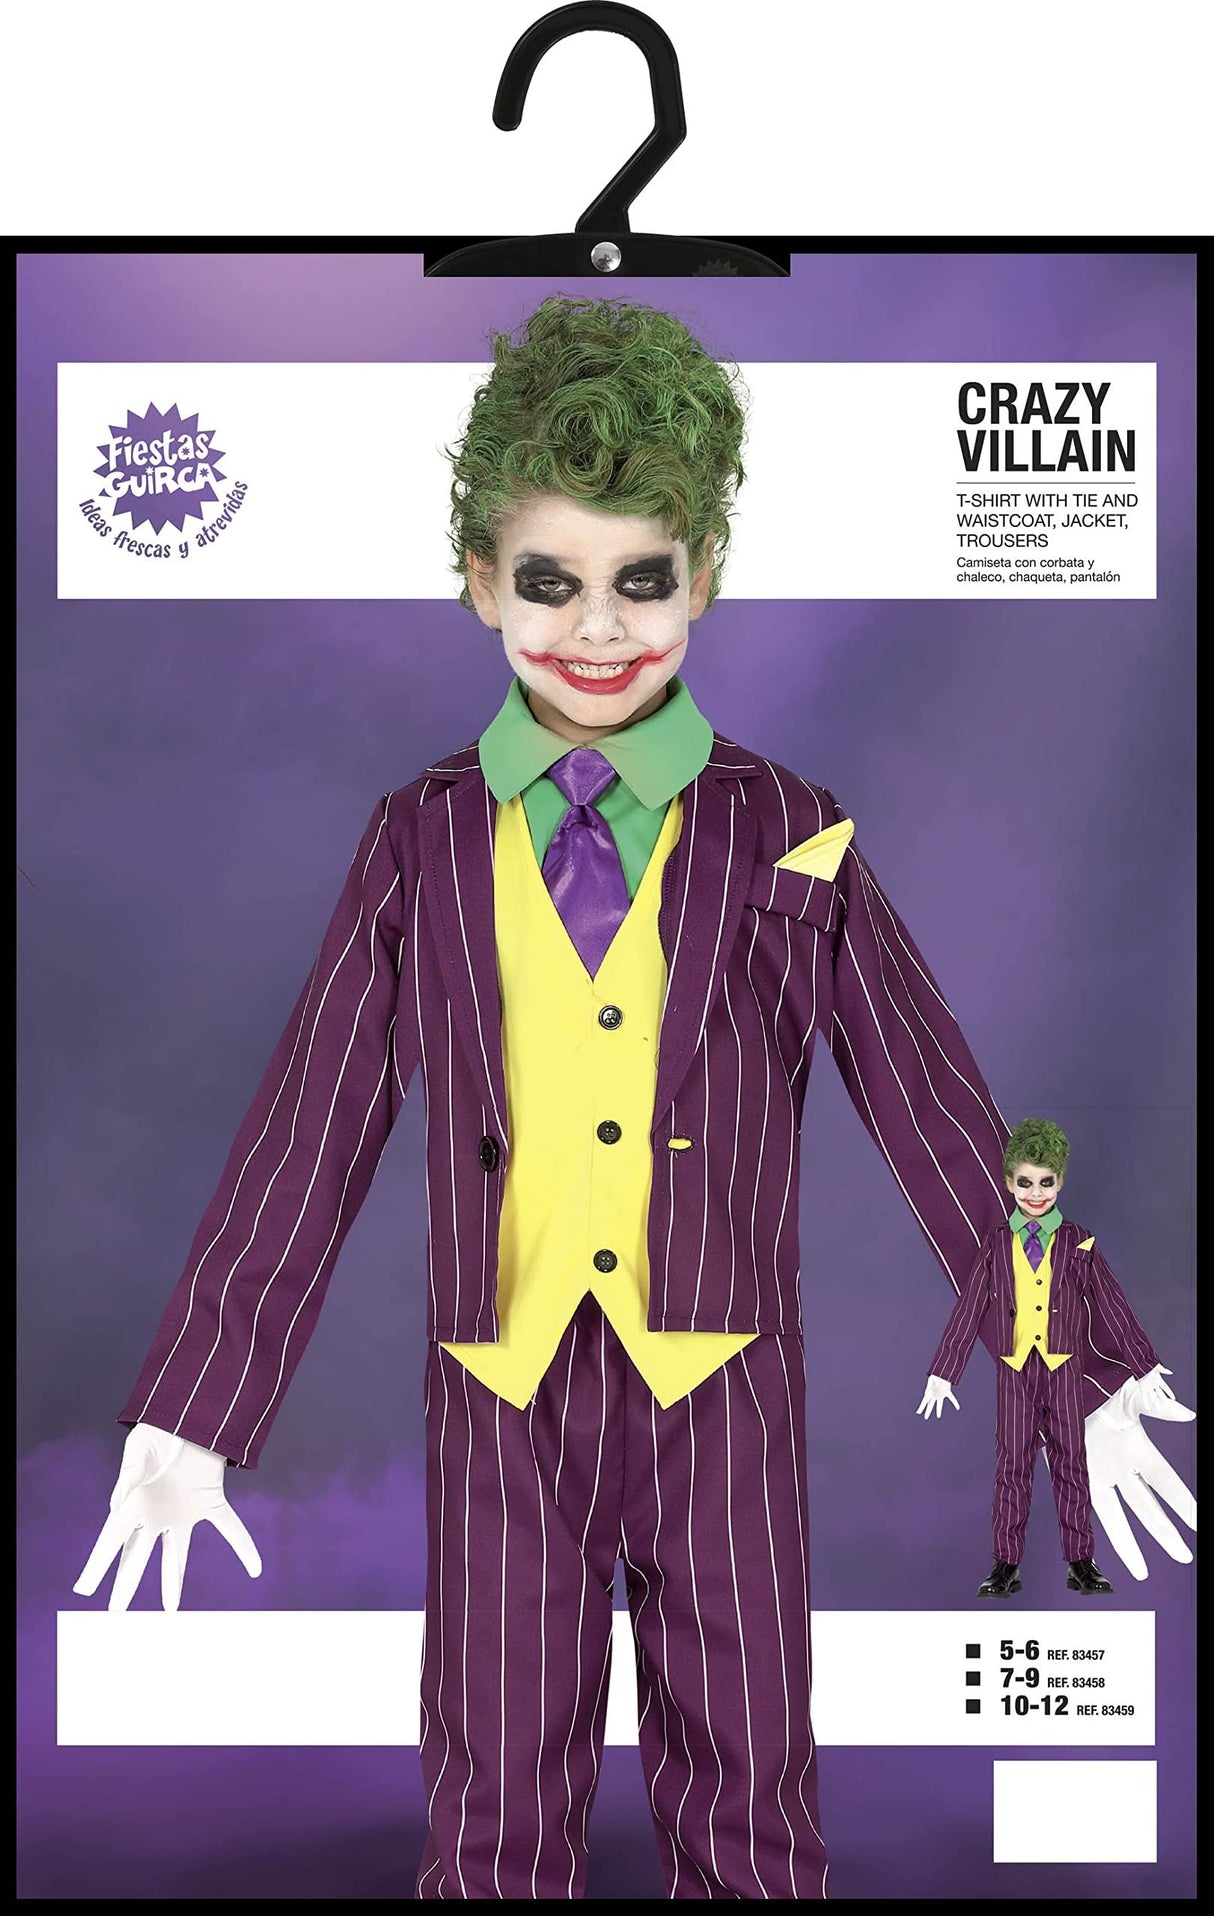 Child Crazy Villain Joker Inspired Costume - 7-9 Years